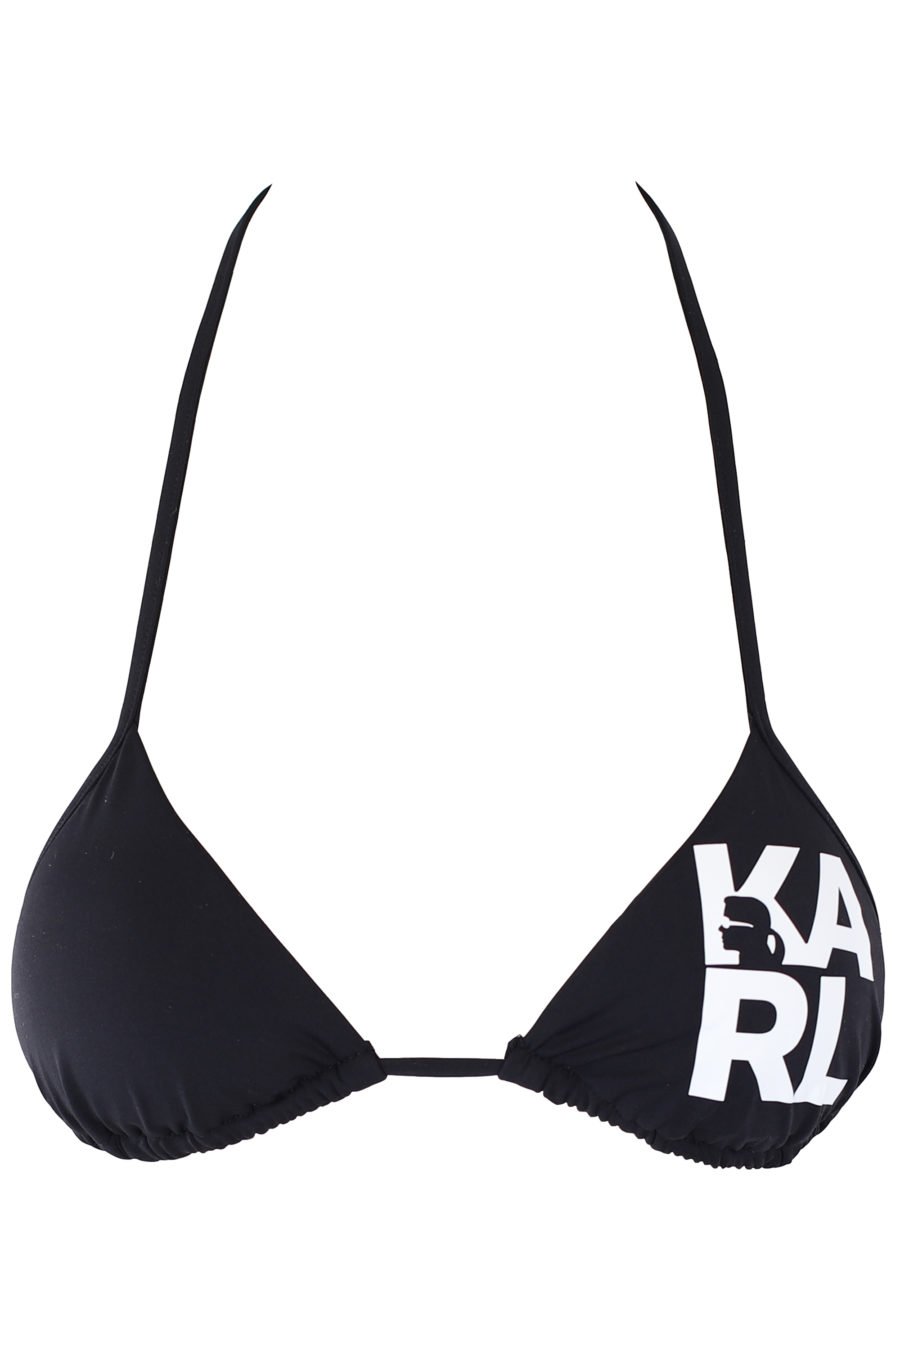 Black bikini top with white logo - IMG 1204